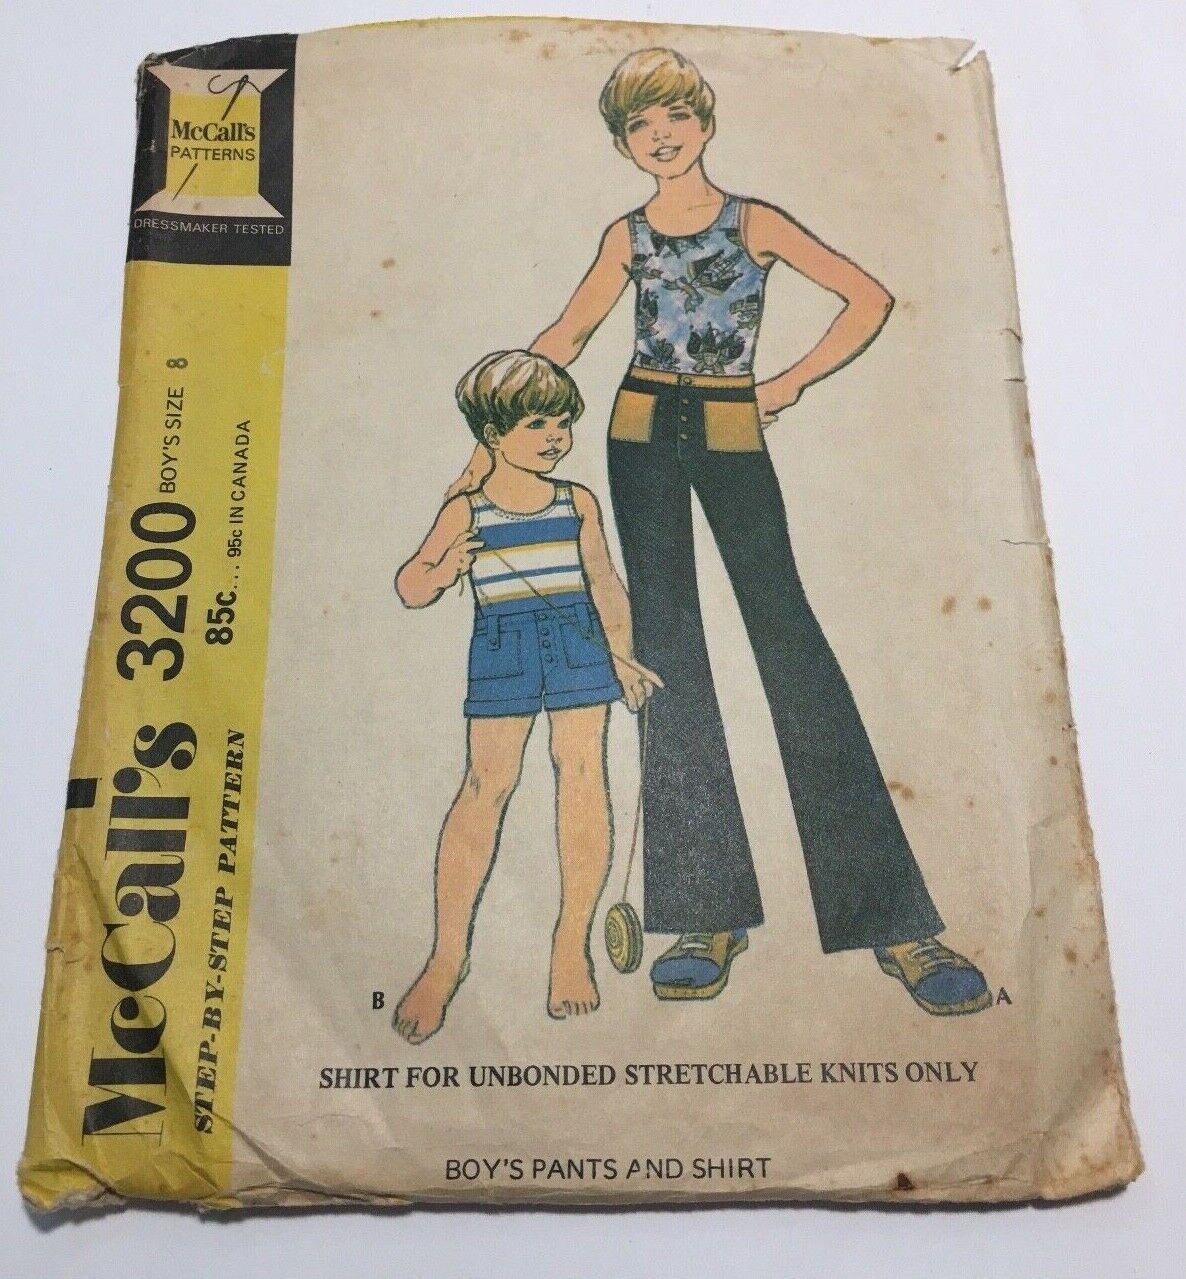 Vintage 1970s McCall's pattern 3200 boys' shirt pants shorts, size 8, cut